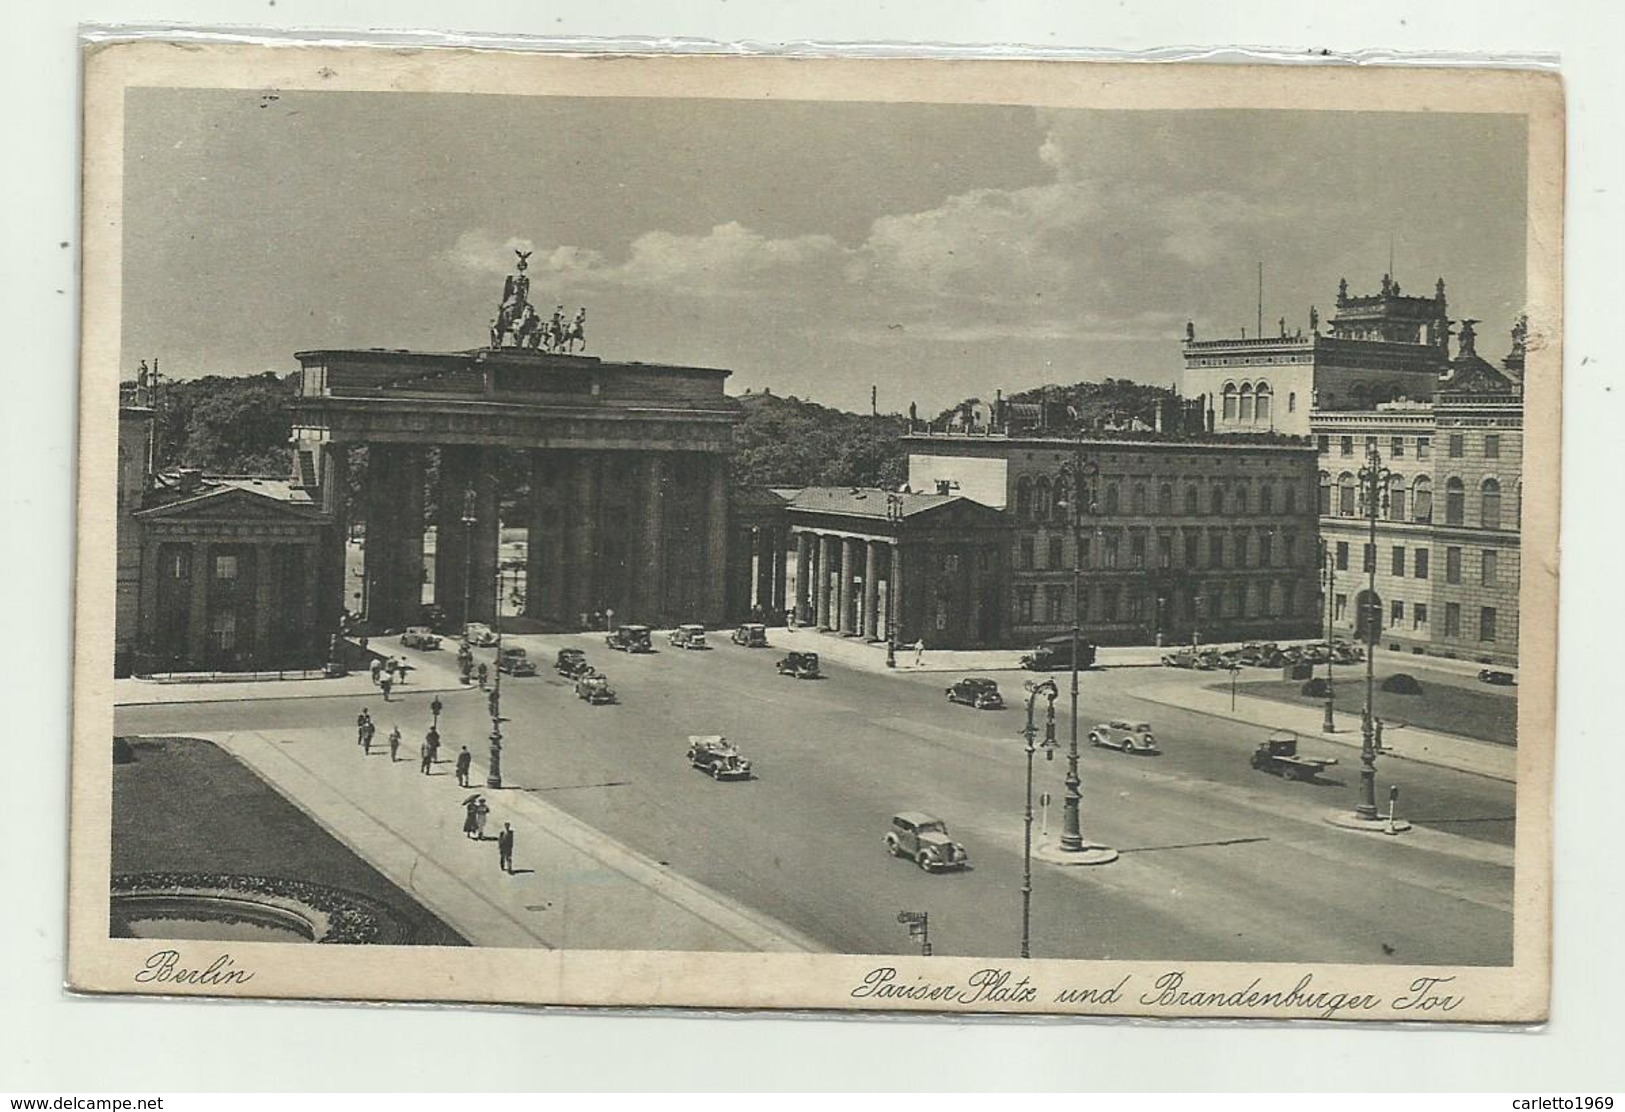 BERLIN - PARISER PLATZ UND BRANDENBURGO TOR 1939 - VIAGGIATA    FP - Porta Di Brandeburgo